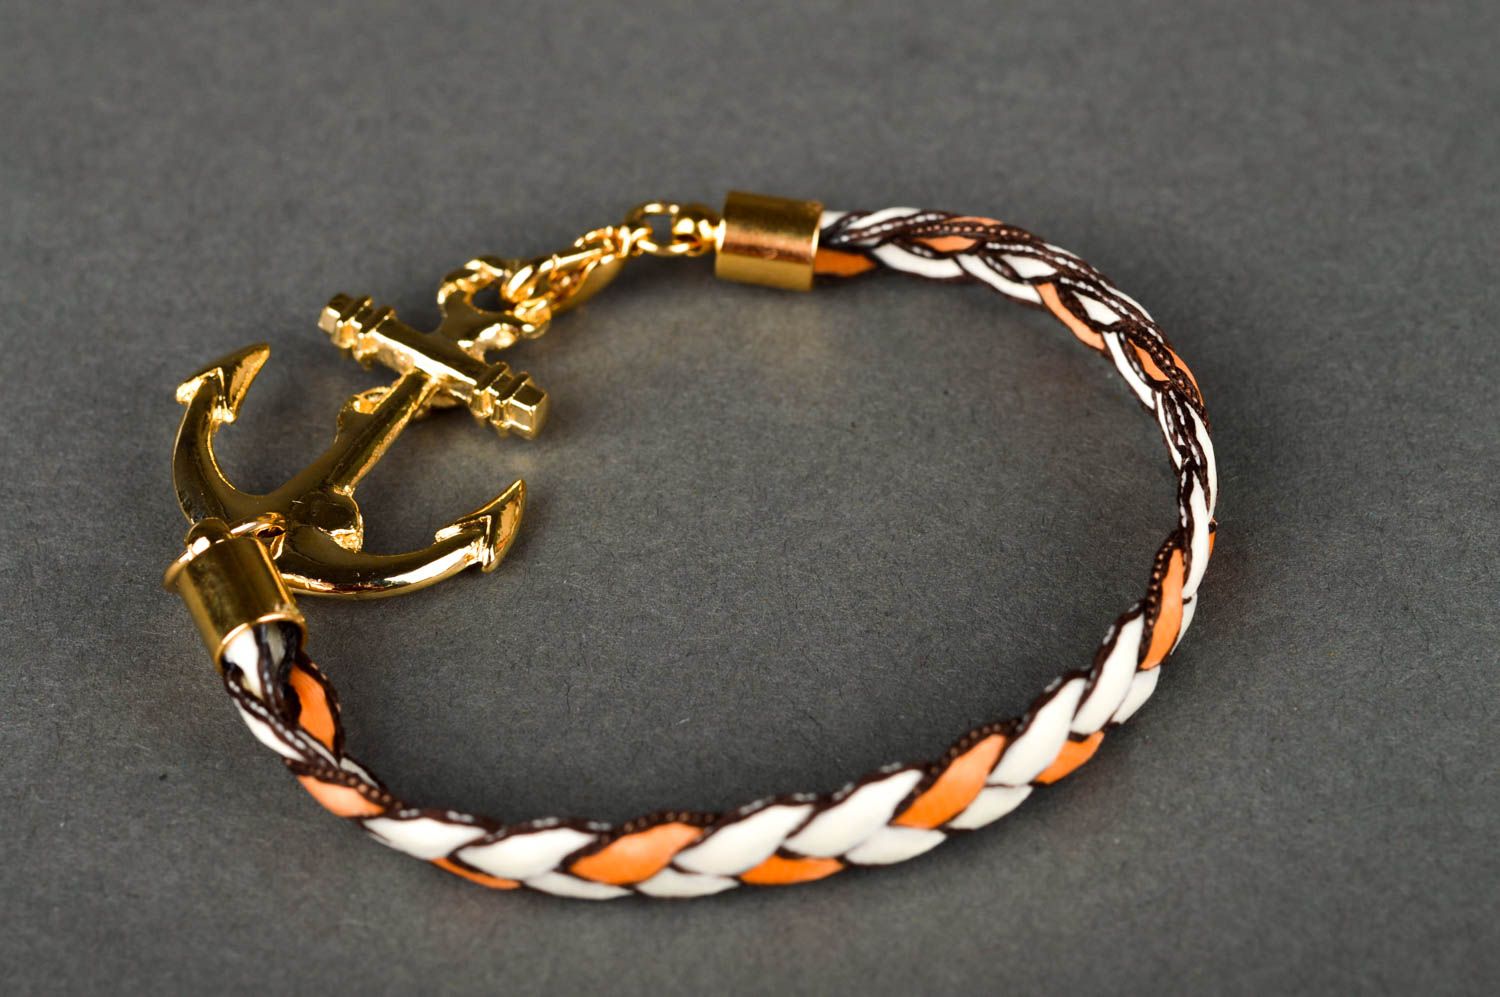 Handmade bracelet wrist bracelet designer accessories fashion jewelry cool gifts photo 3